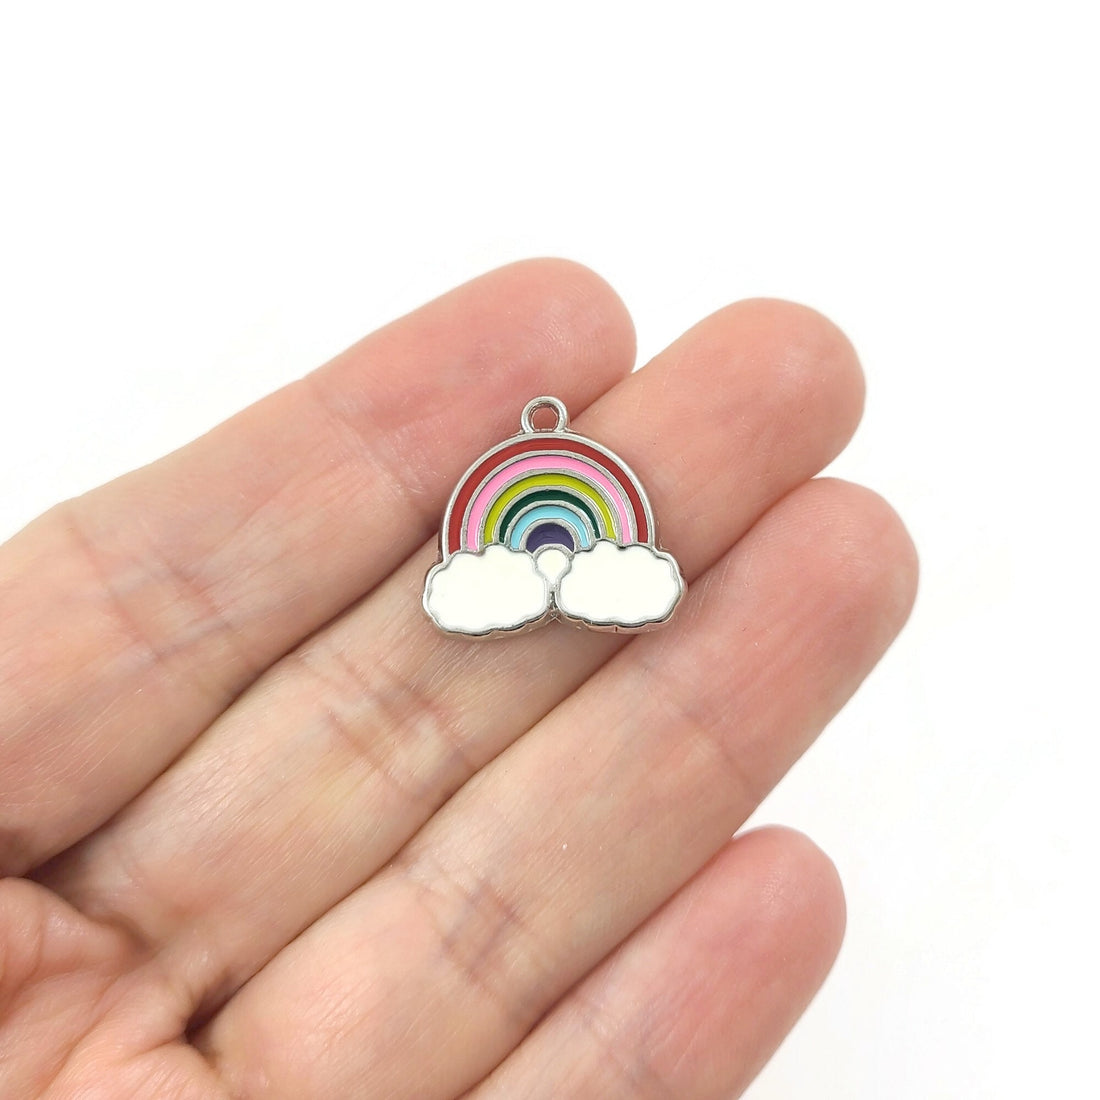 5 rainbow enamel charms, Nickel free metal pendants, Cute pendants for jewelry making